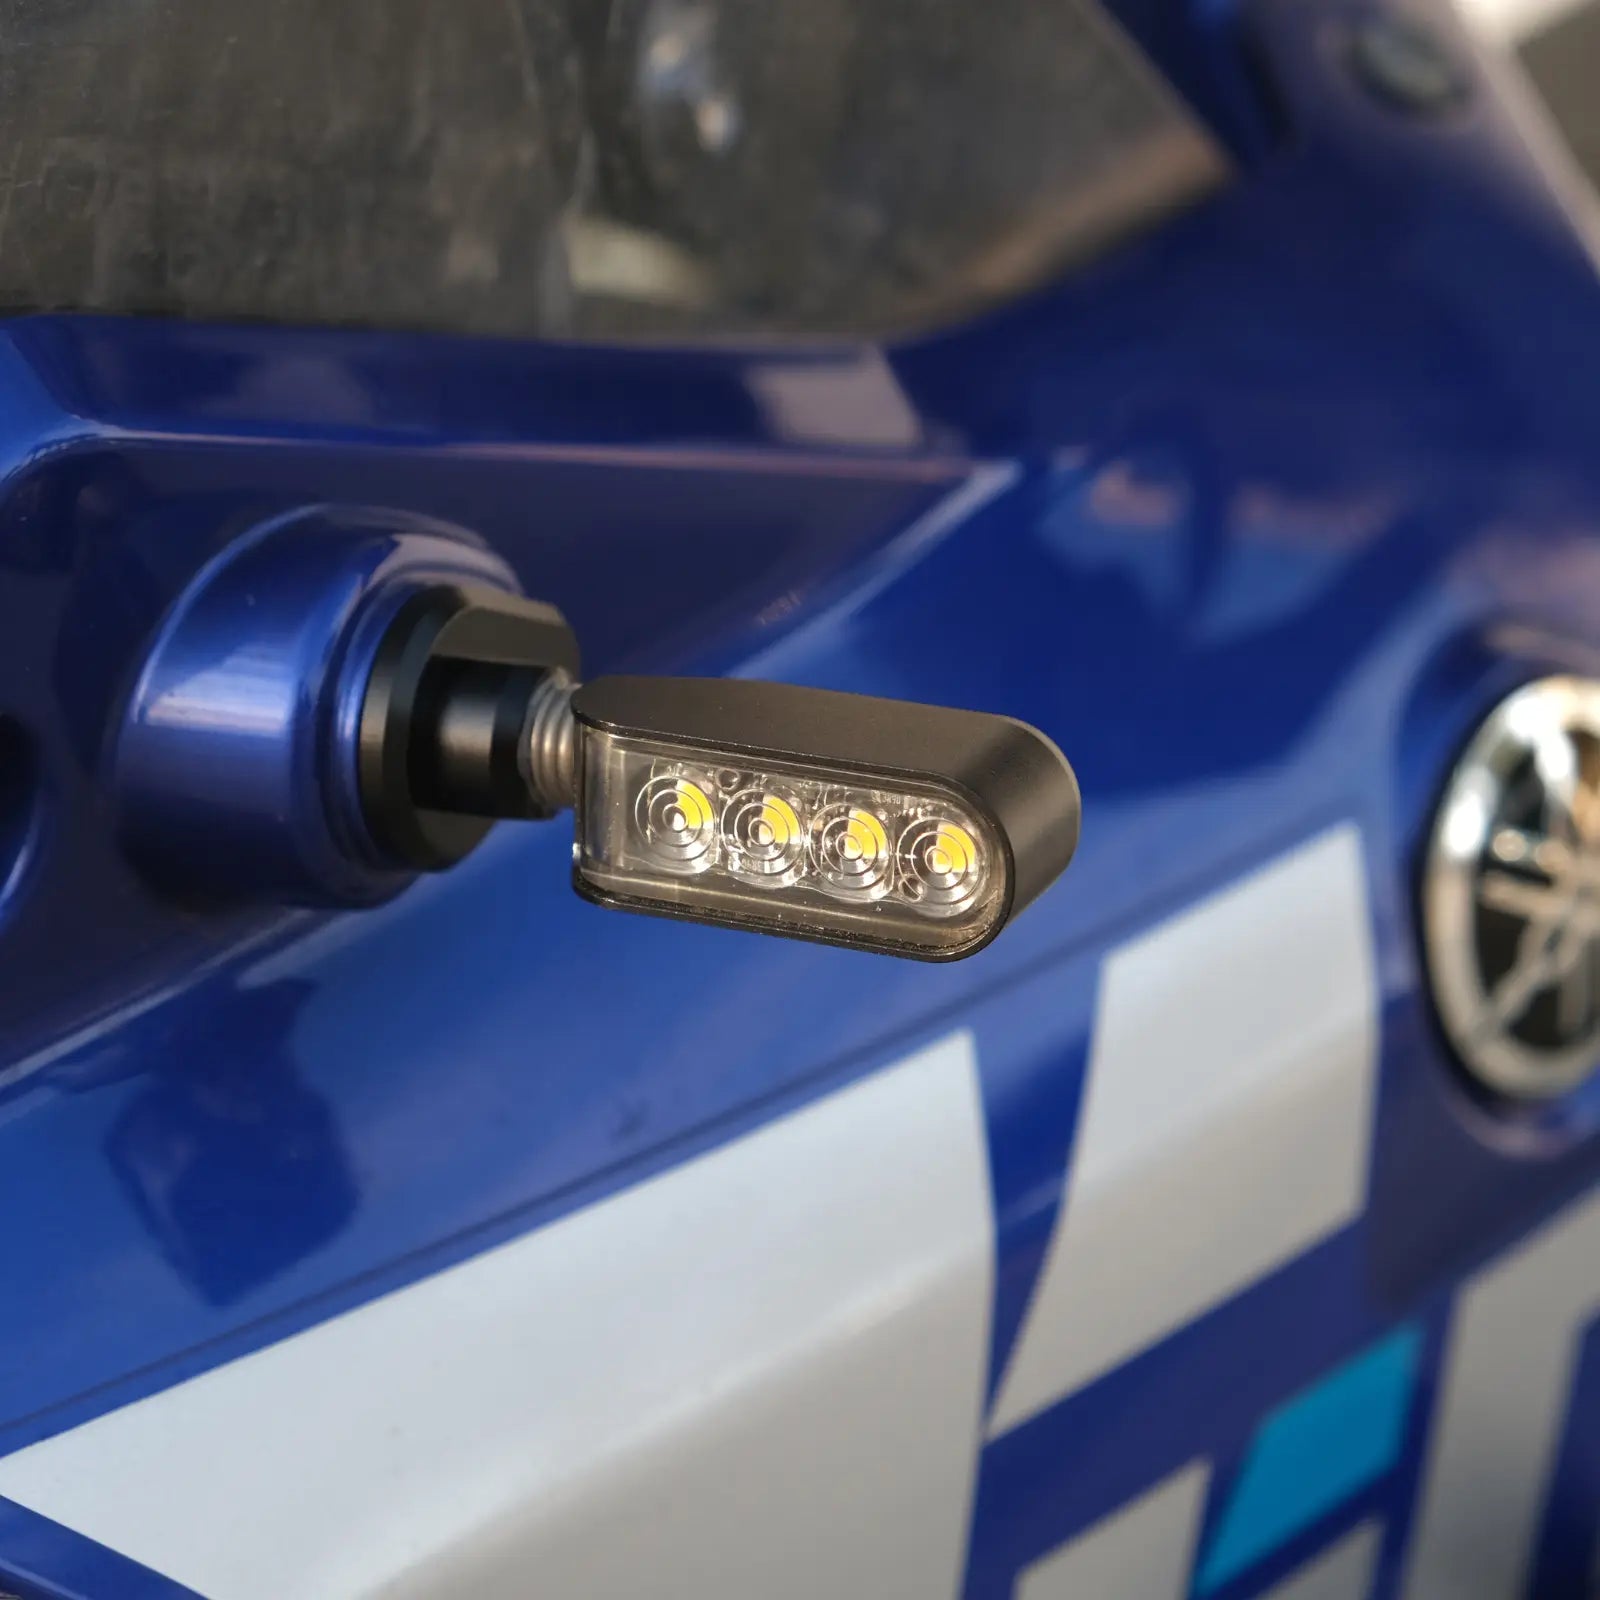 Led Turn Signal Light Indicator Blinker Lamp For E Bike Motorcycle Body  Material: Pc at Best Price in Changshu